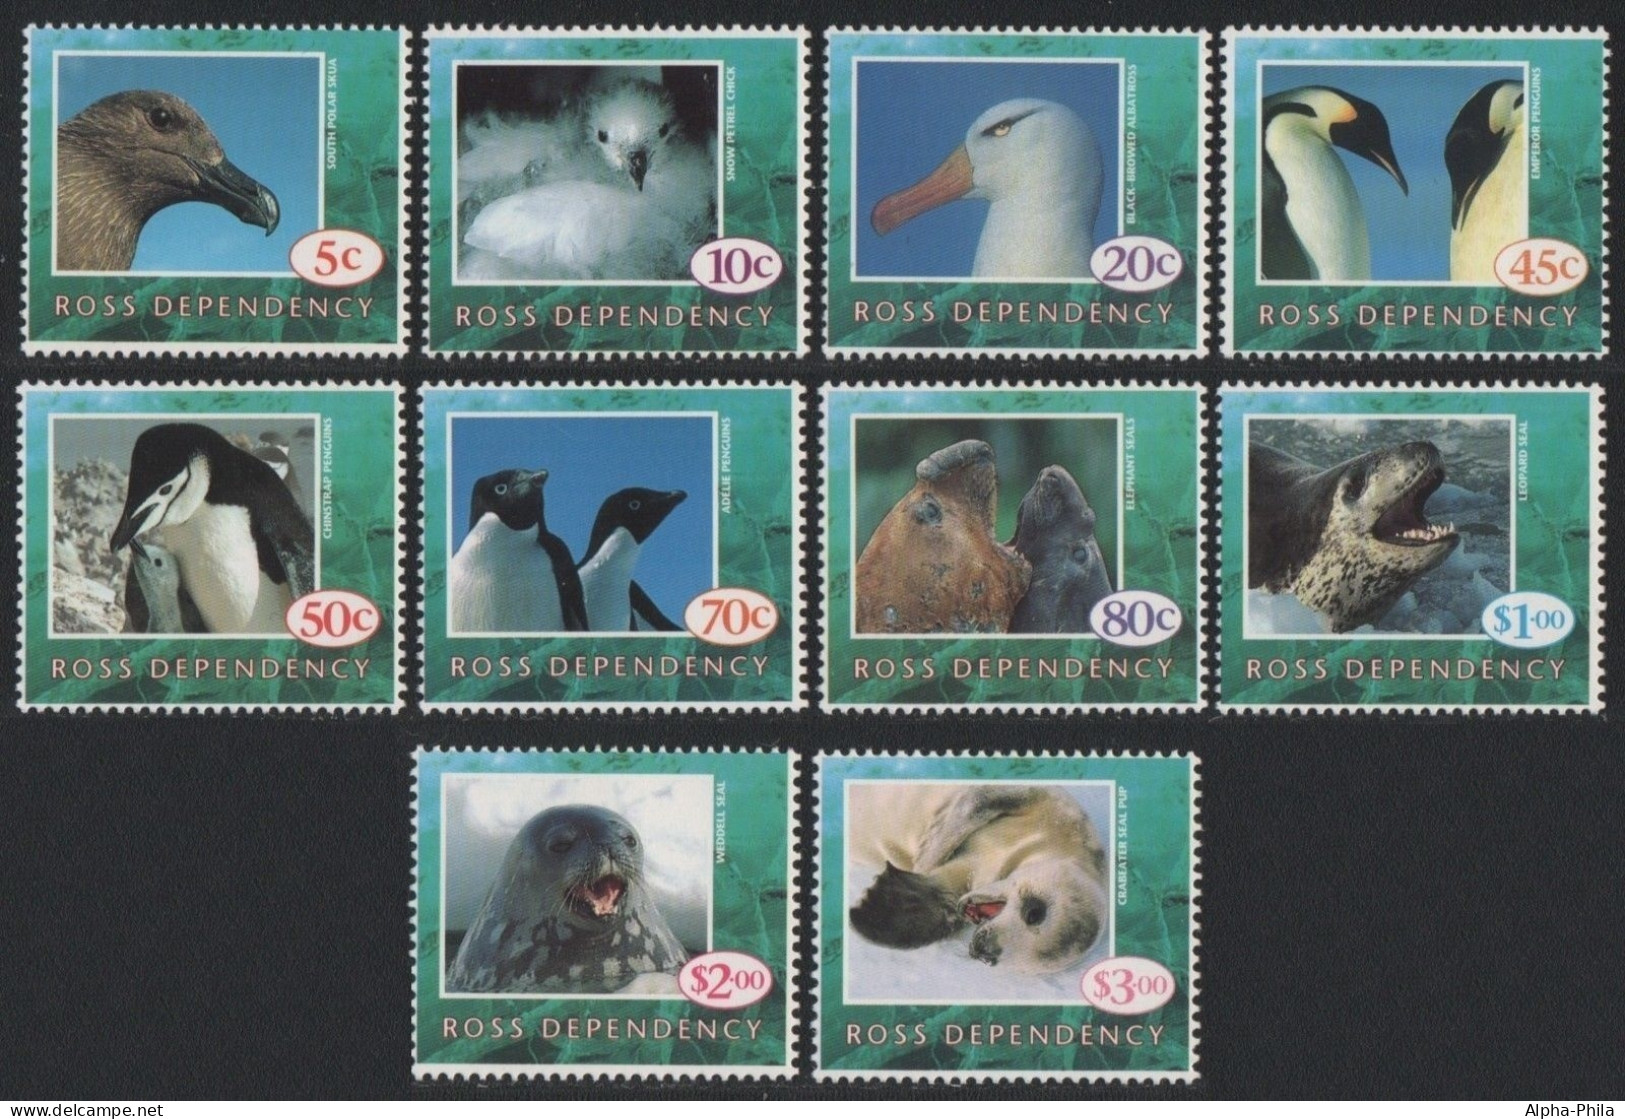 Ross-Gebiet 1994 - Mi-Nr. 21-30 ** - MNH - Vögel, Robben / Birds, Seals - Neufs